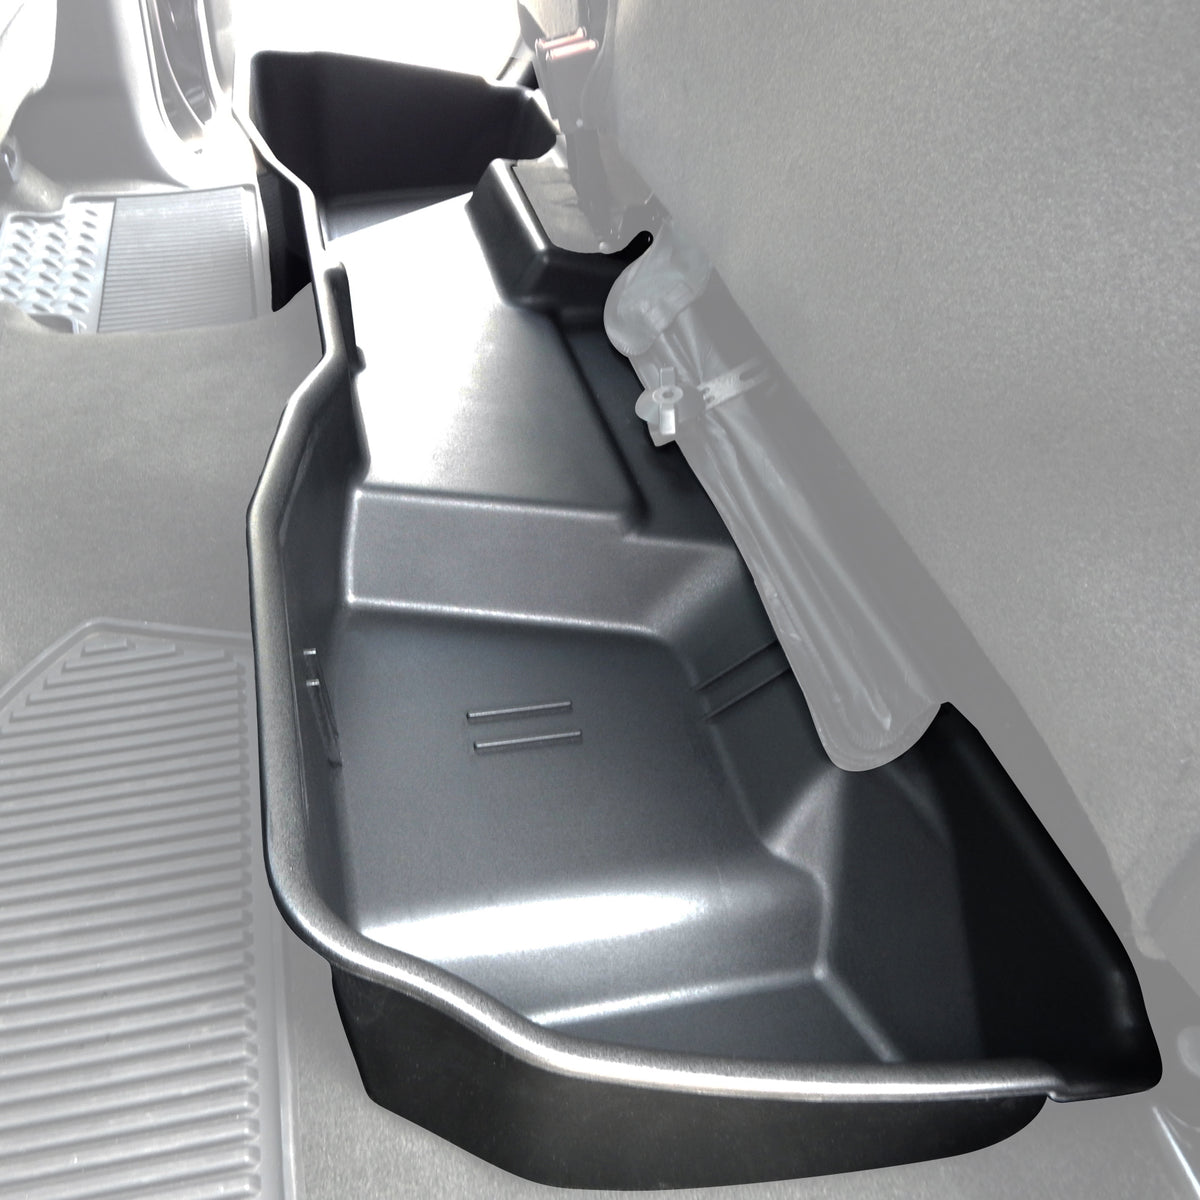 Red Hound Auto Under Seat Storage Box fits Double Cab